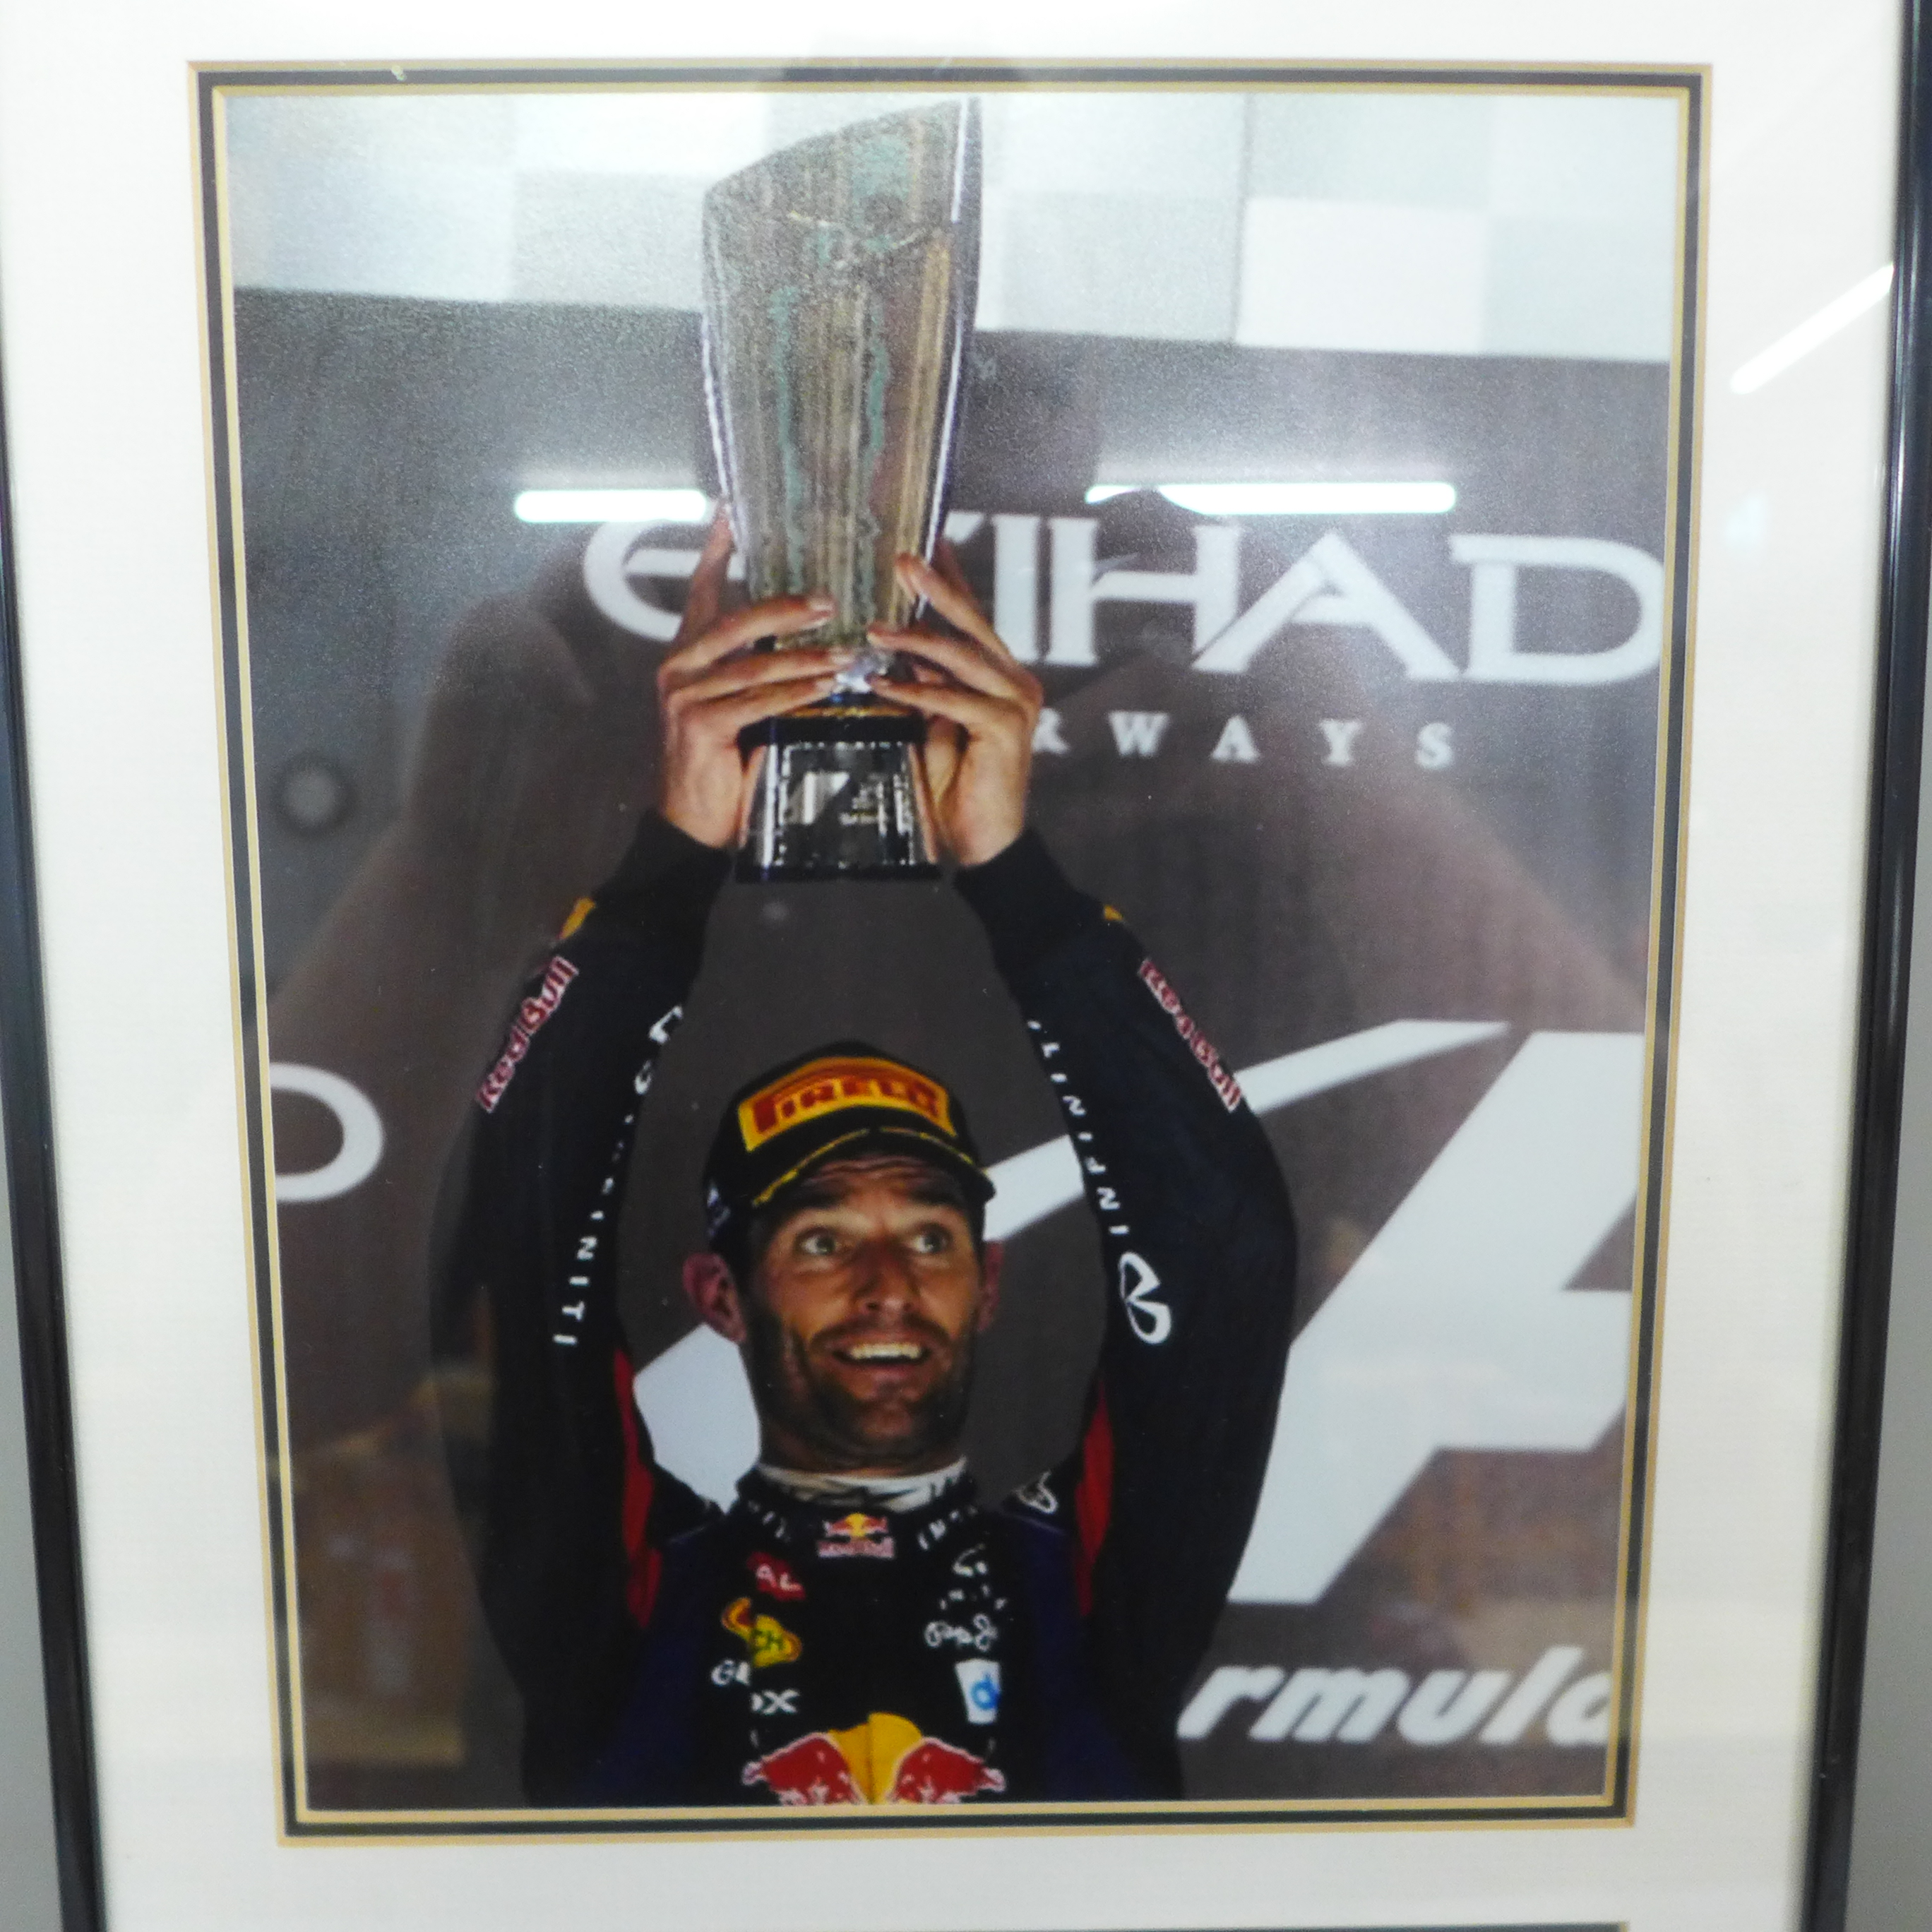 Three motor racing autograph displays, Jean-Eric Vergne, Mark Webber and Kimi Räikkönen, each with - Bild 2 aus 9